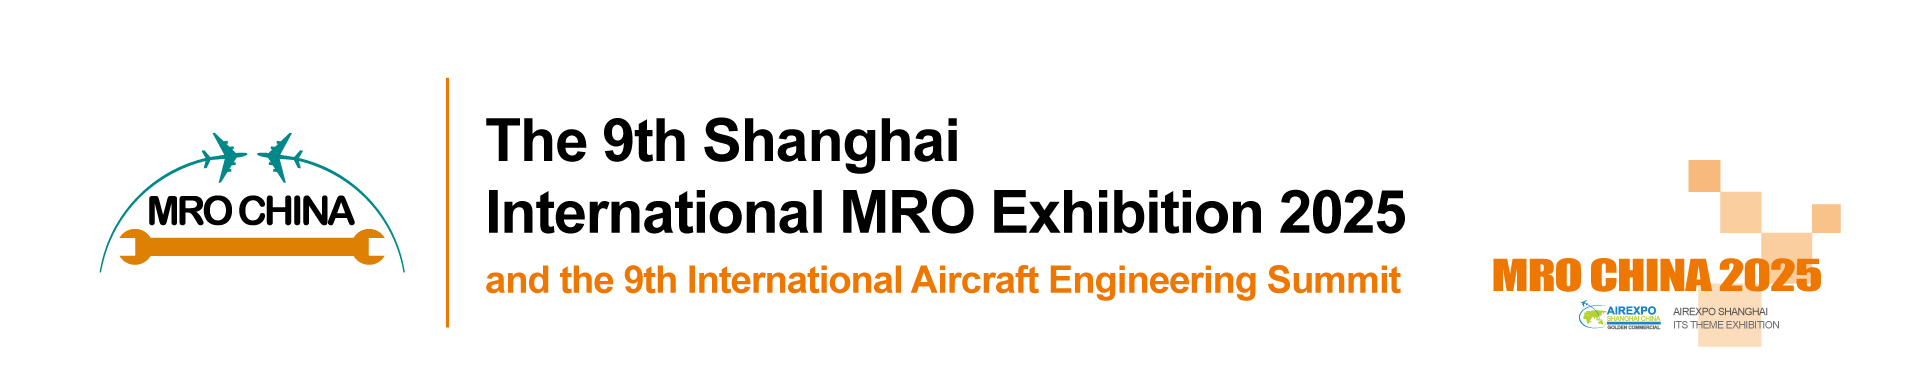 The 9th Shanghai International MRO Exhibition 2025